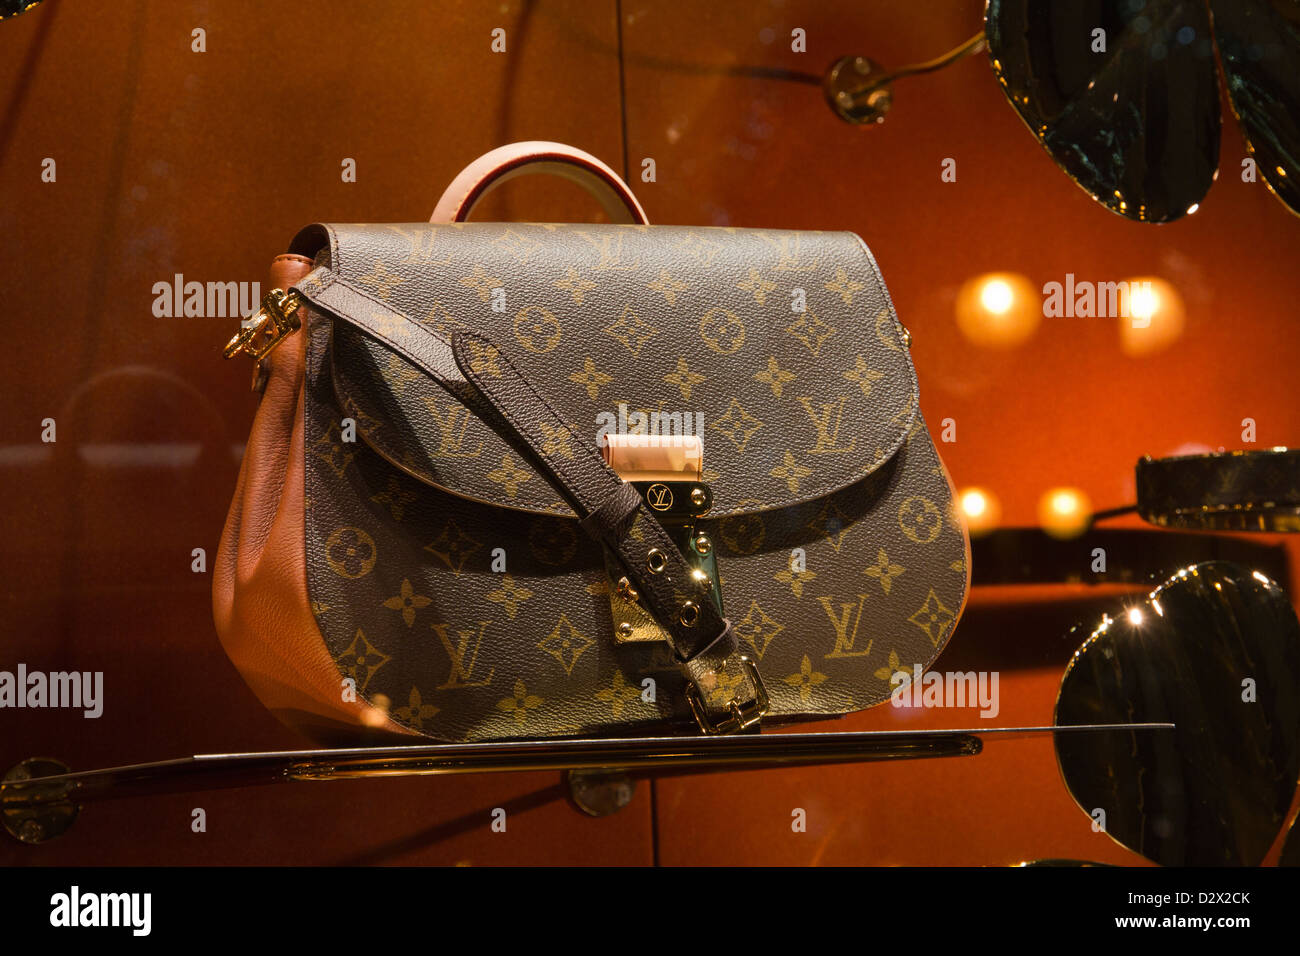 Louis Vuitton bag displayed in window showcase Stock Photo - Alamy